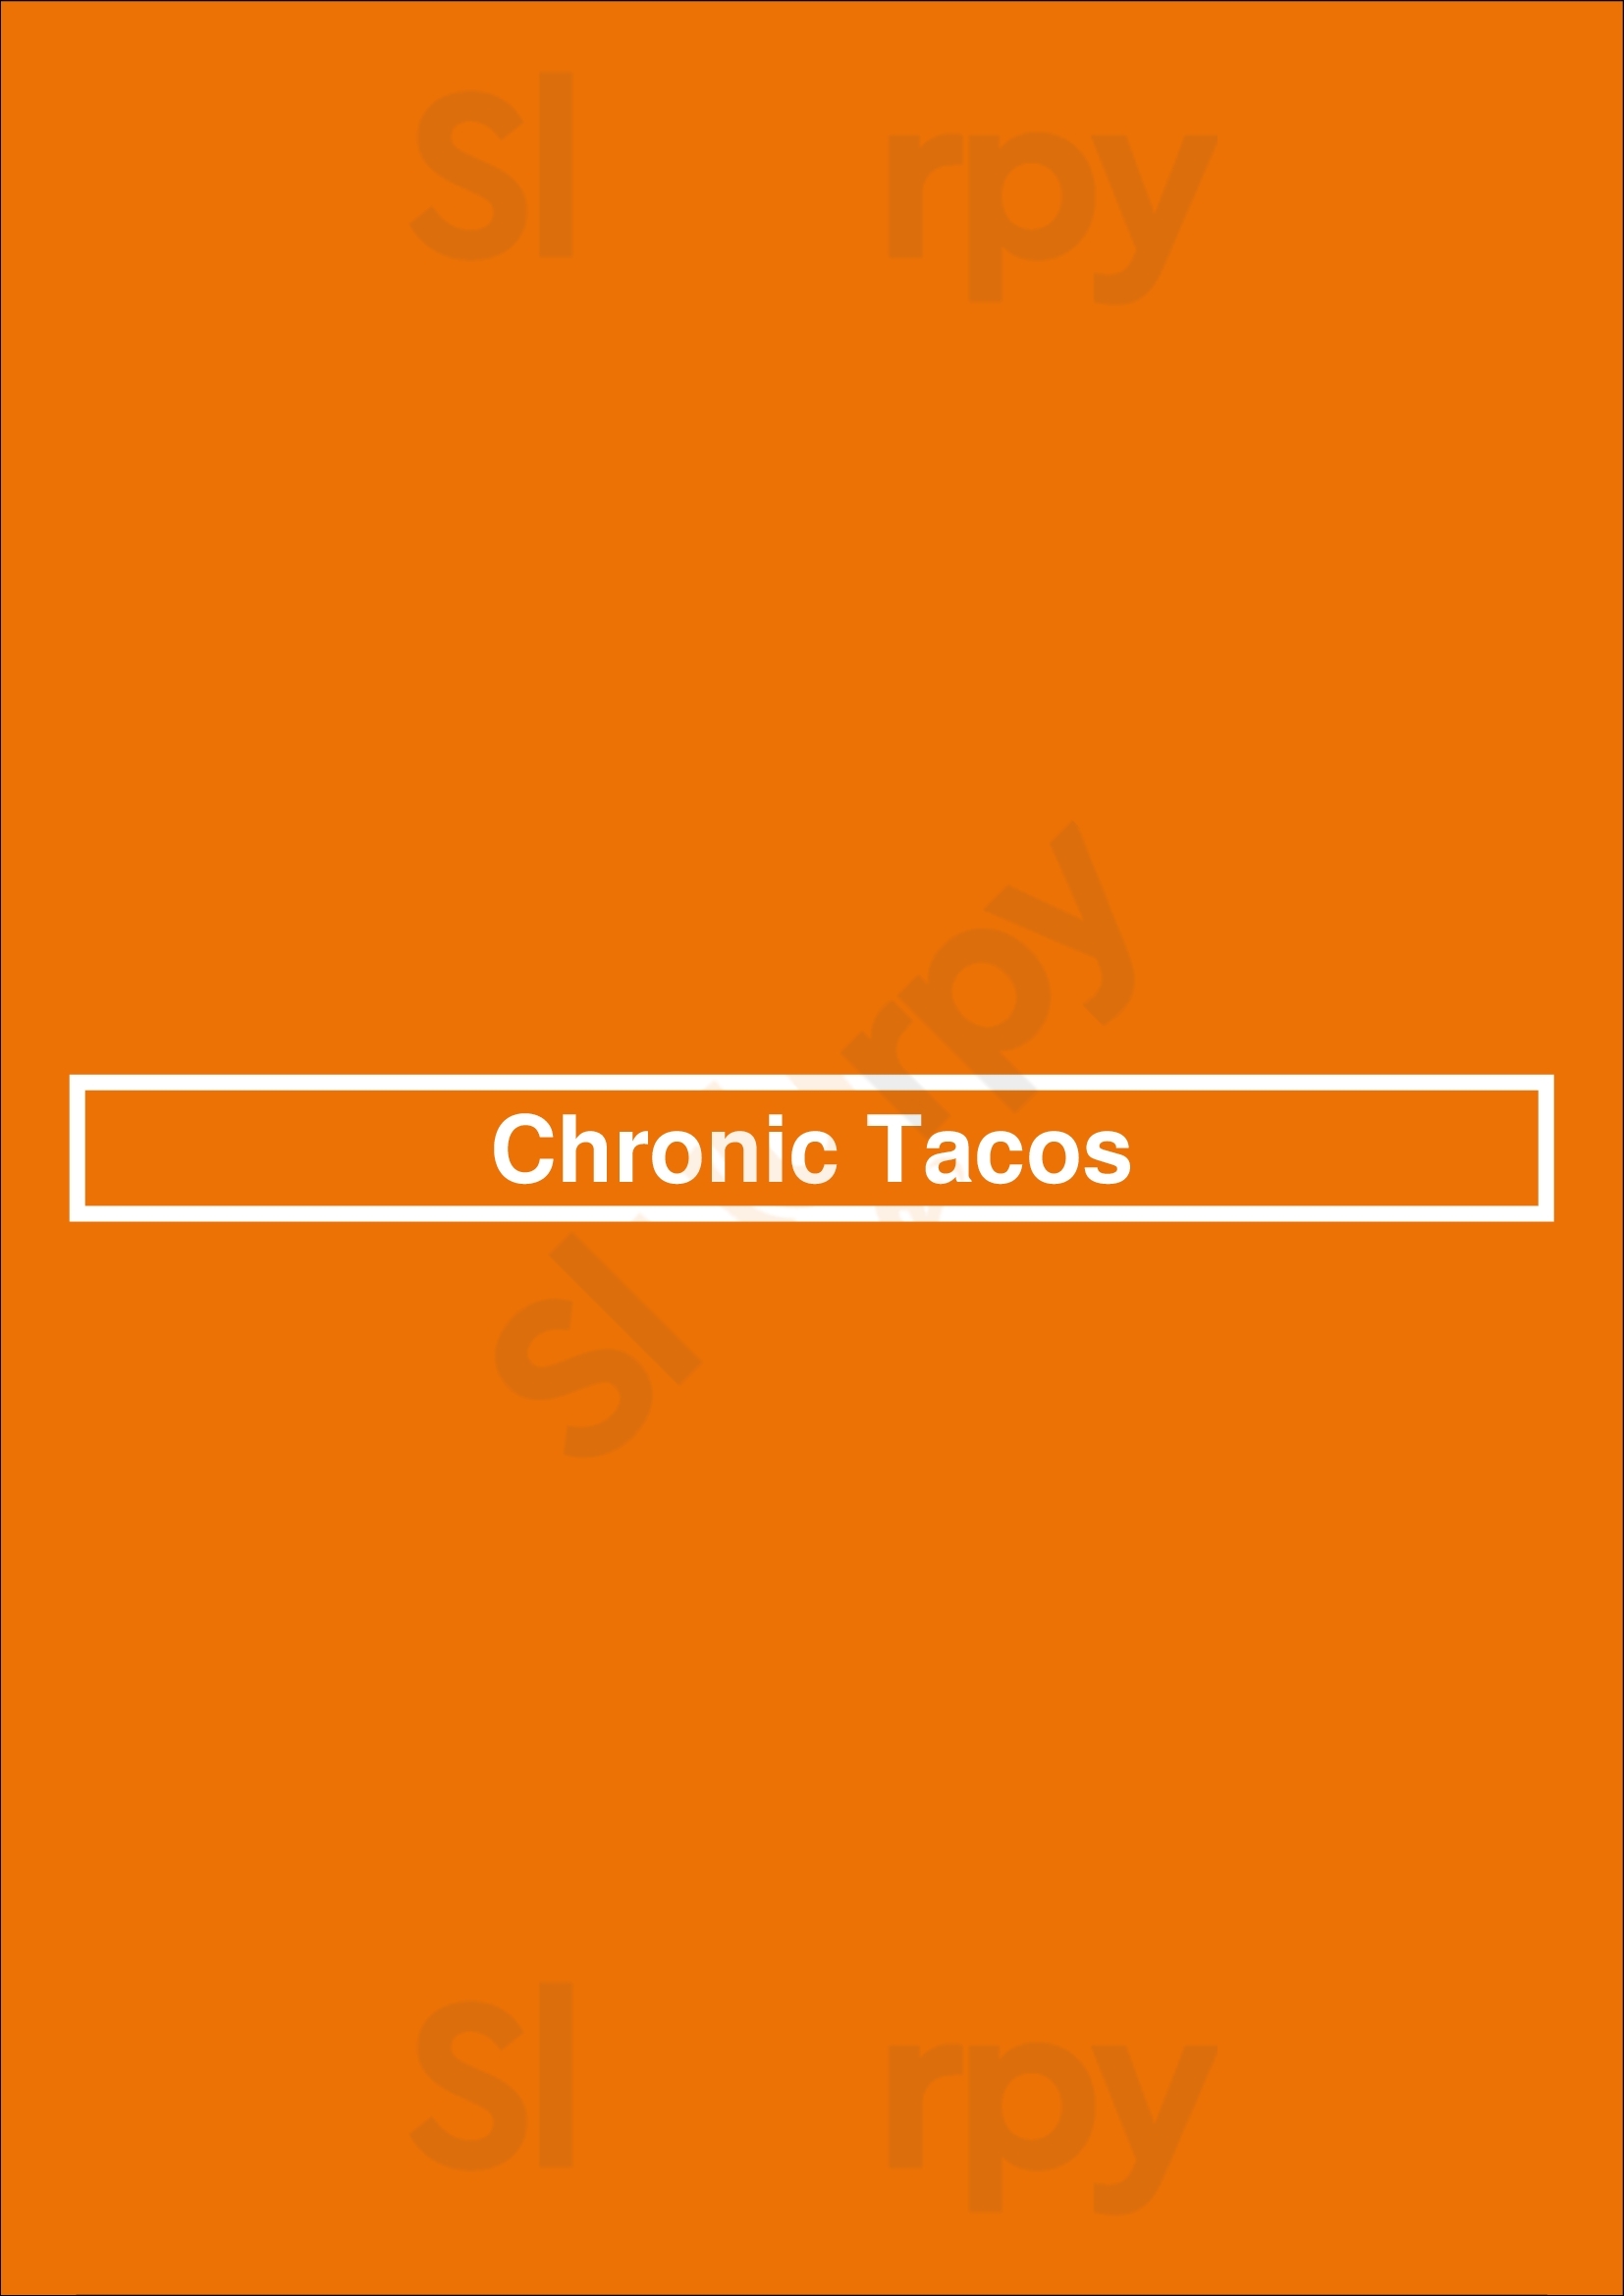 Chronic Tacos Long Beach Menu - 1